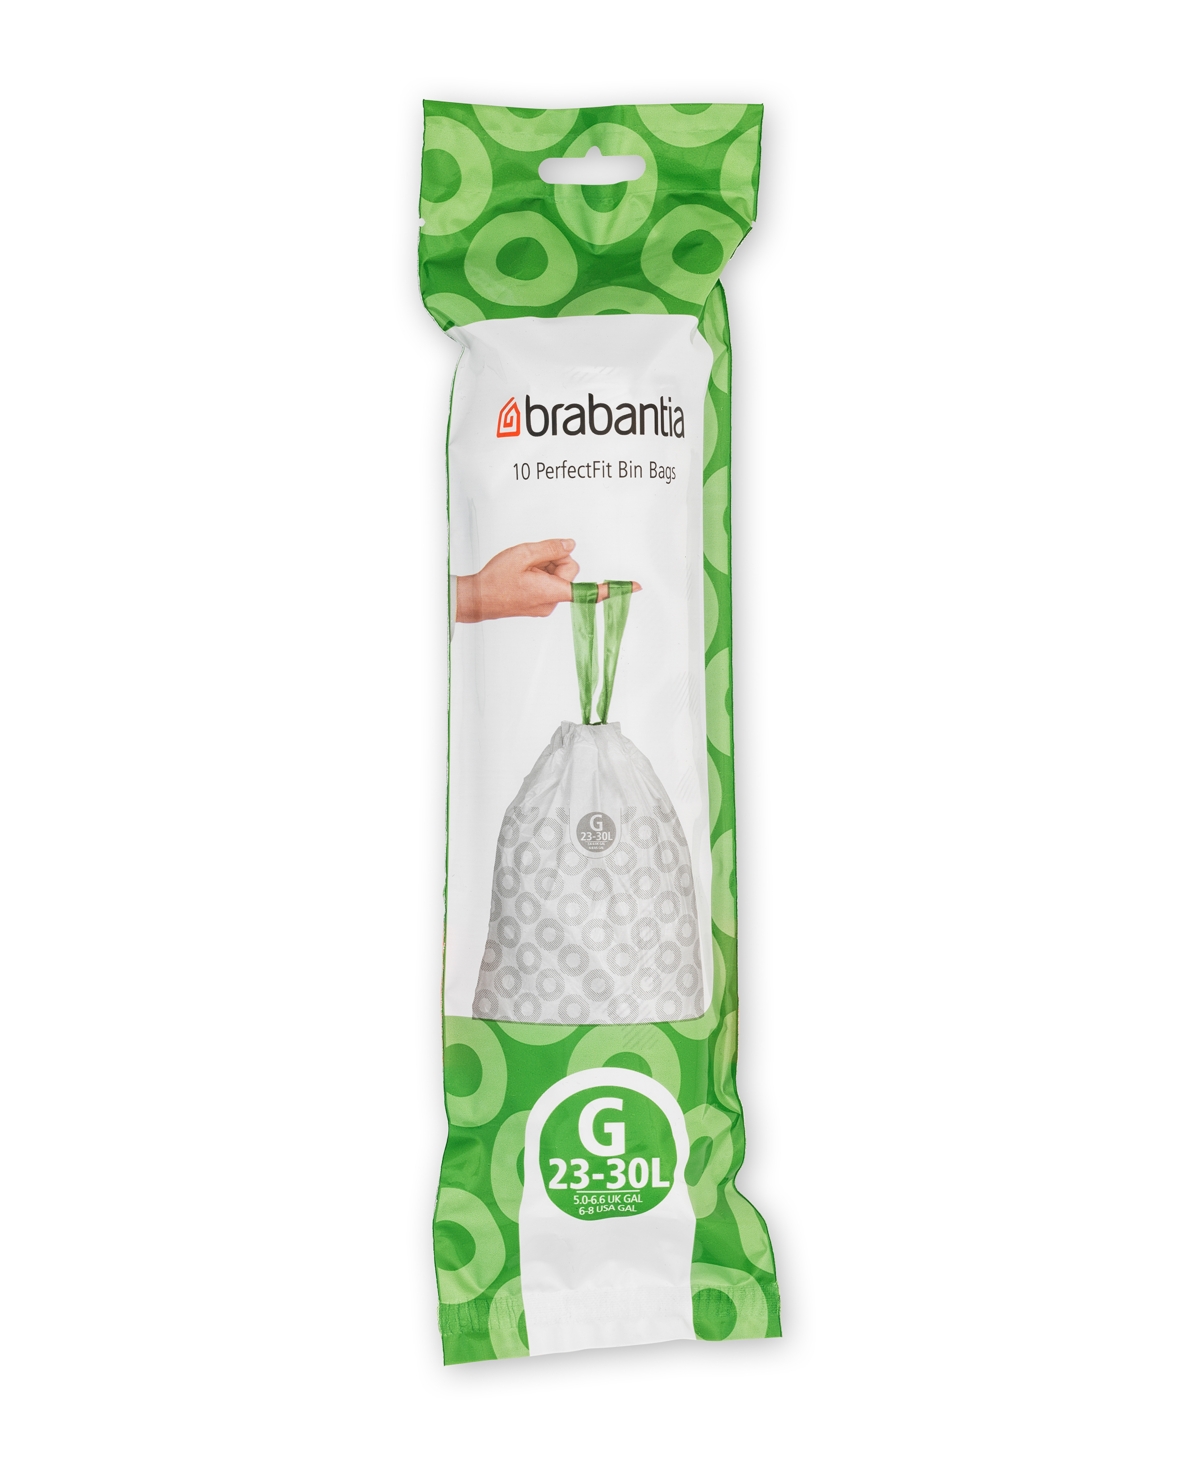 Brabantia Perfectfit Trash Bags, Code G, 6-8 Gallon, 23-30 Liter, 120 Trash Bags In White